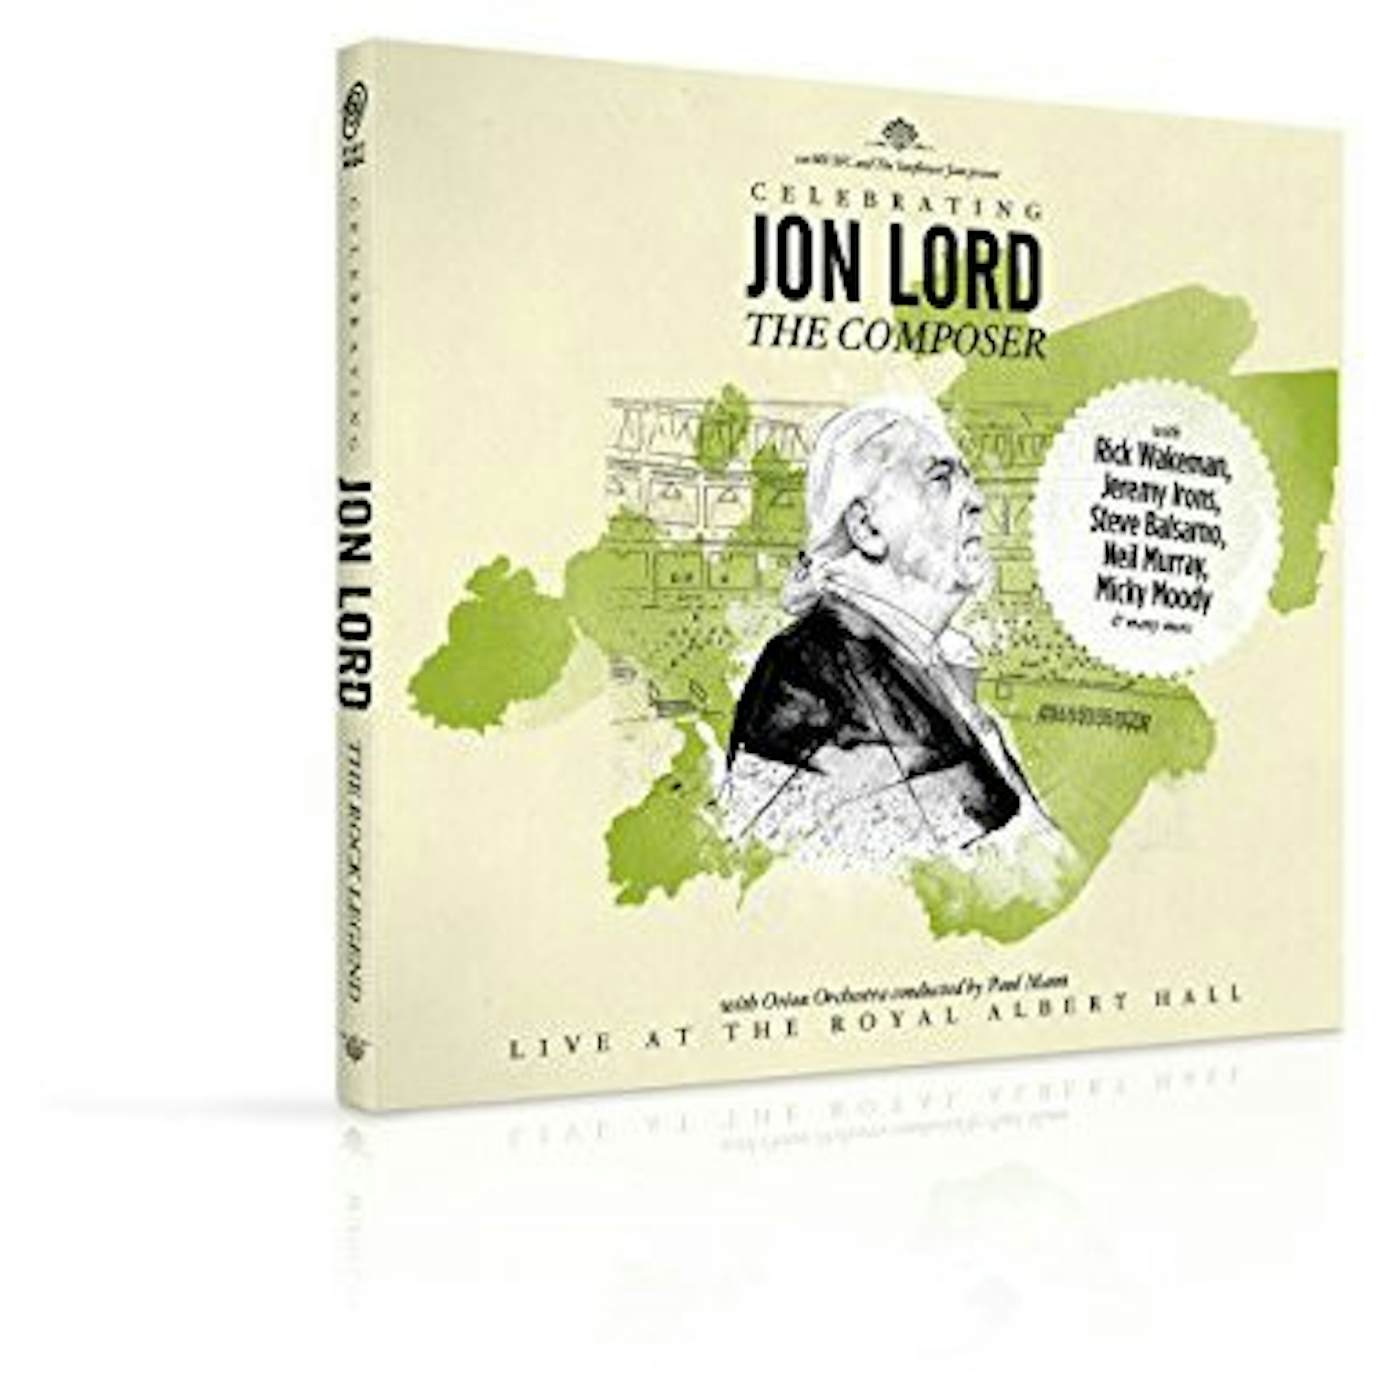 CELEBRATING JON LORD THE COMPOSER CD